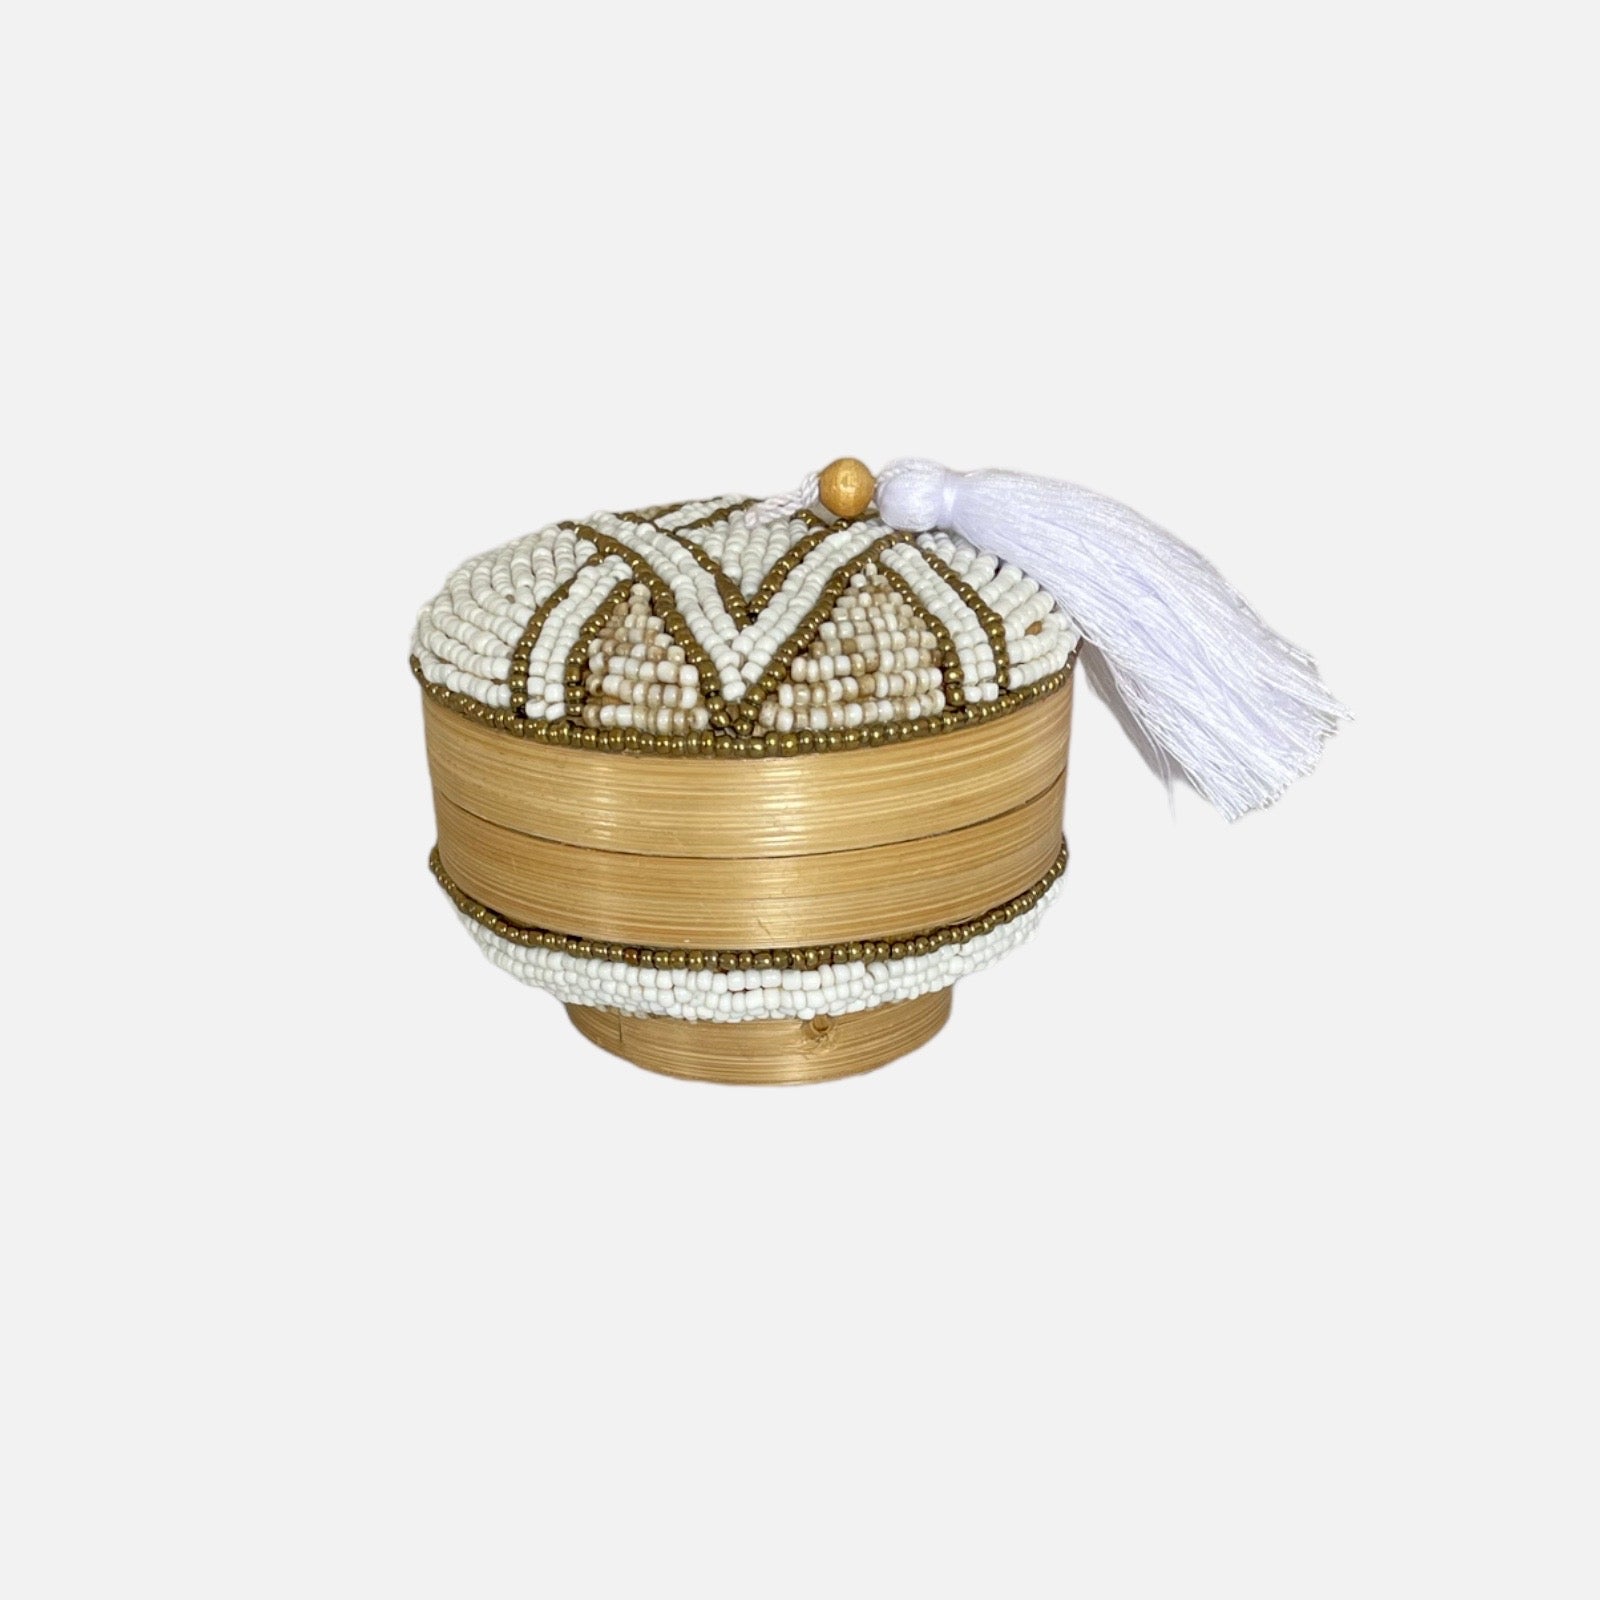 Melasti Bead Box Round with Tassel - White and Gold